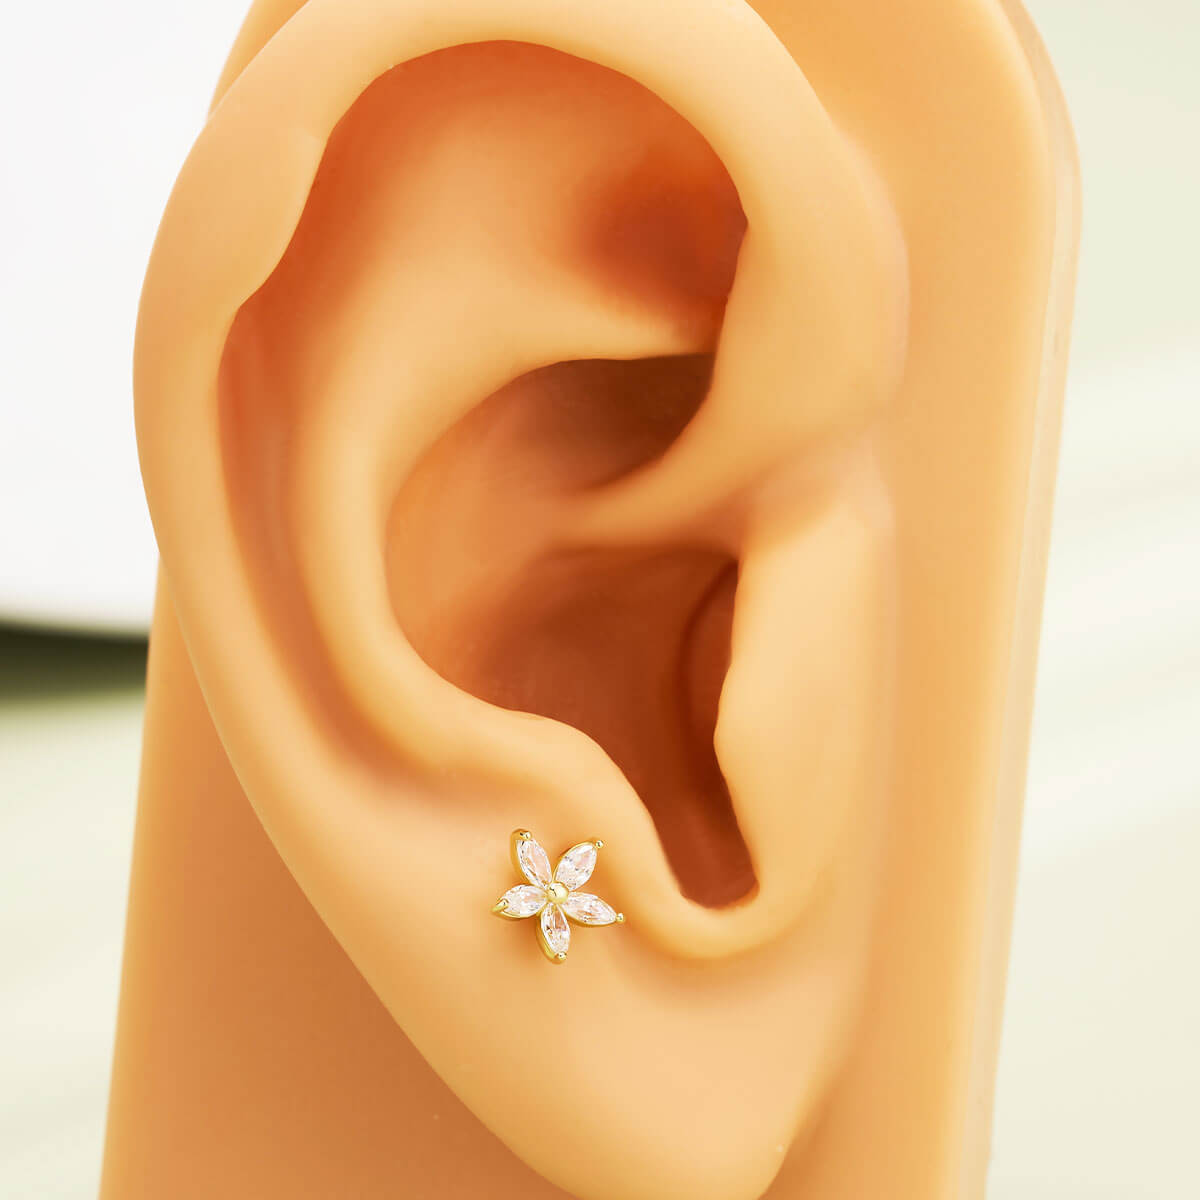 flower earring stud